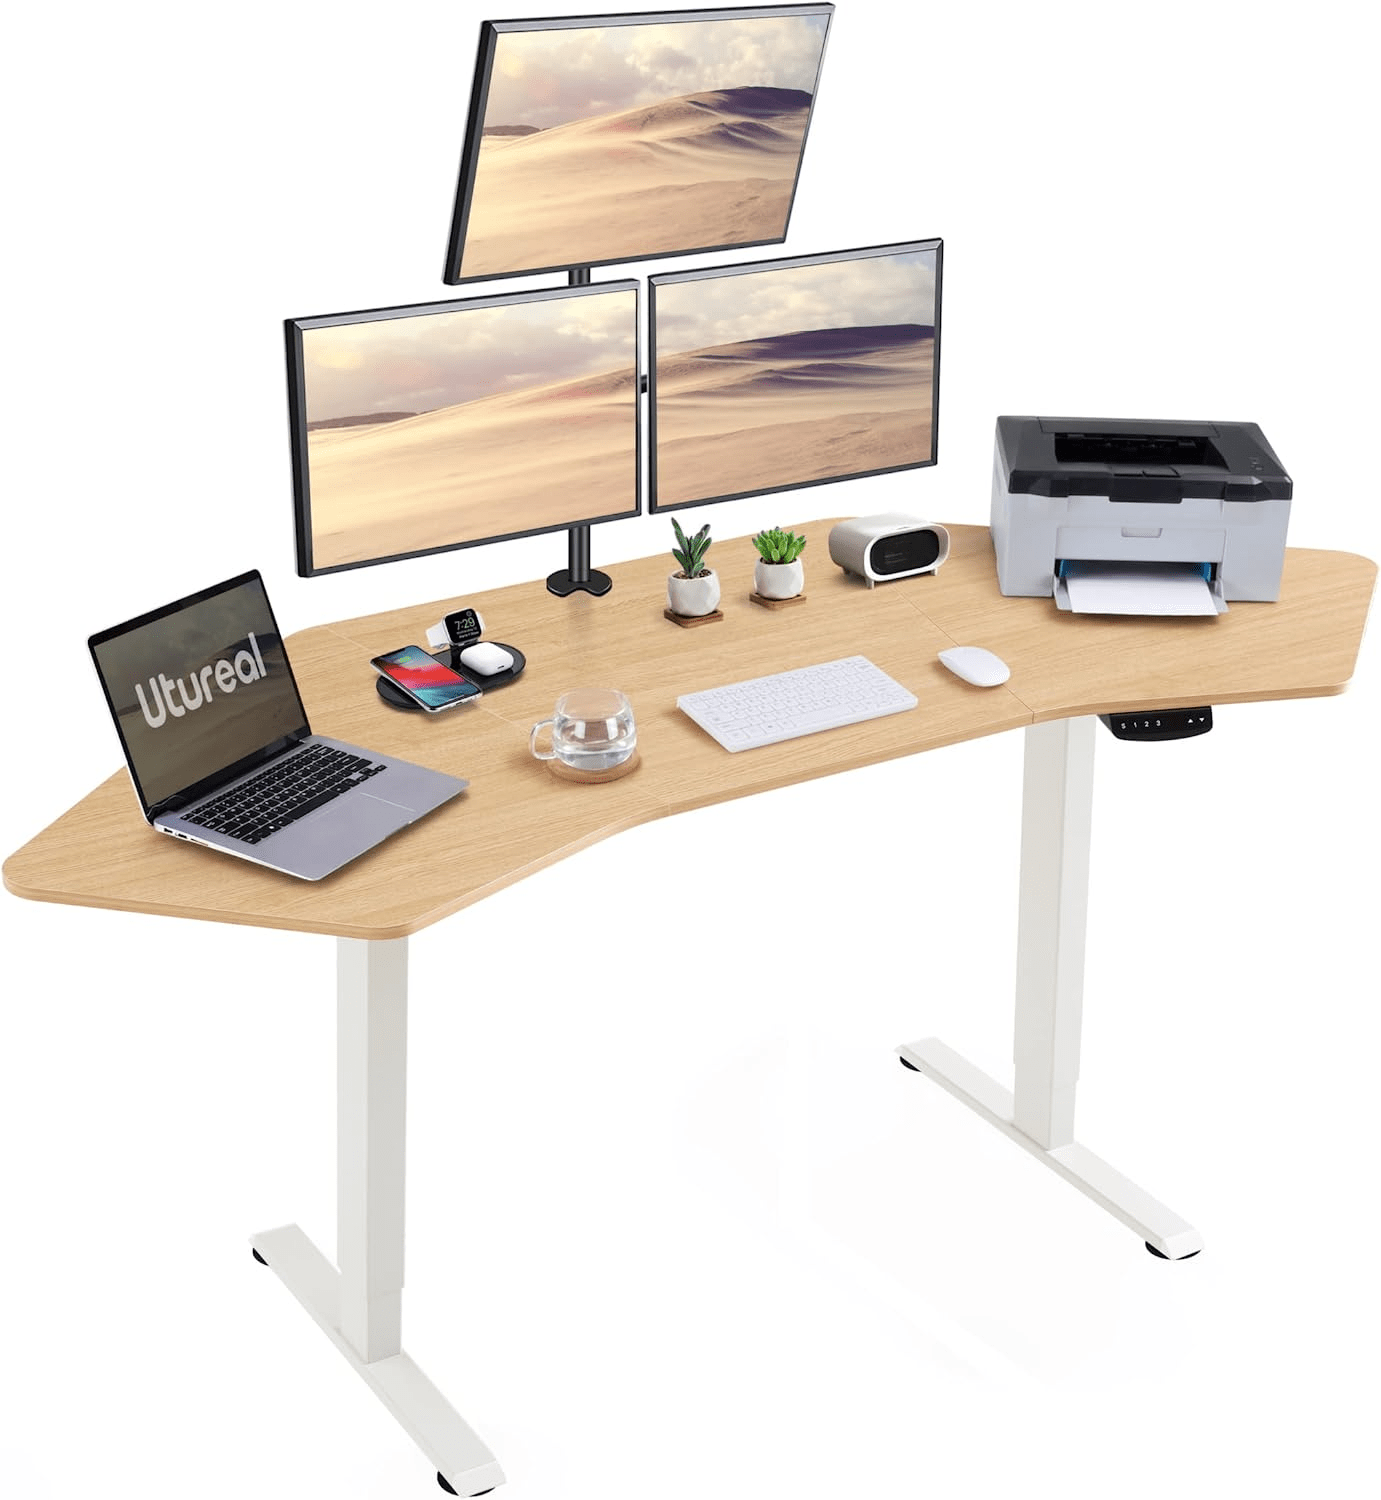 Adjustable Standing Desk 71 Inch Dual Motor Wing Shaped Stand up Desk for Home Office Ergonomic Sit Stand Corner Desk New